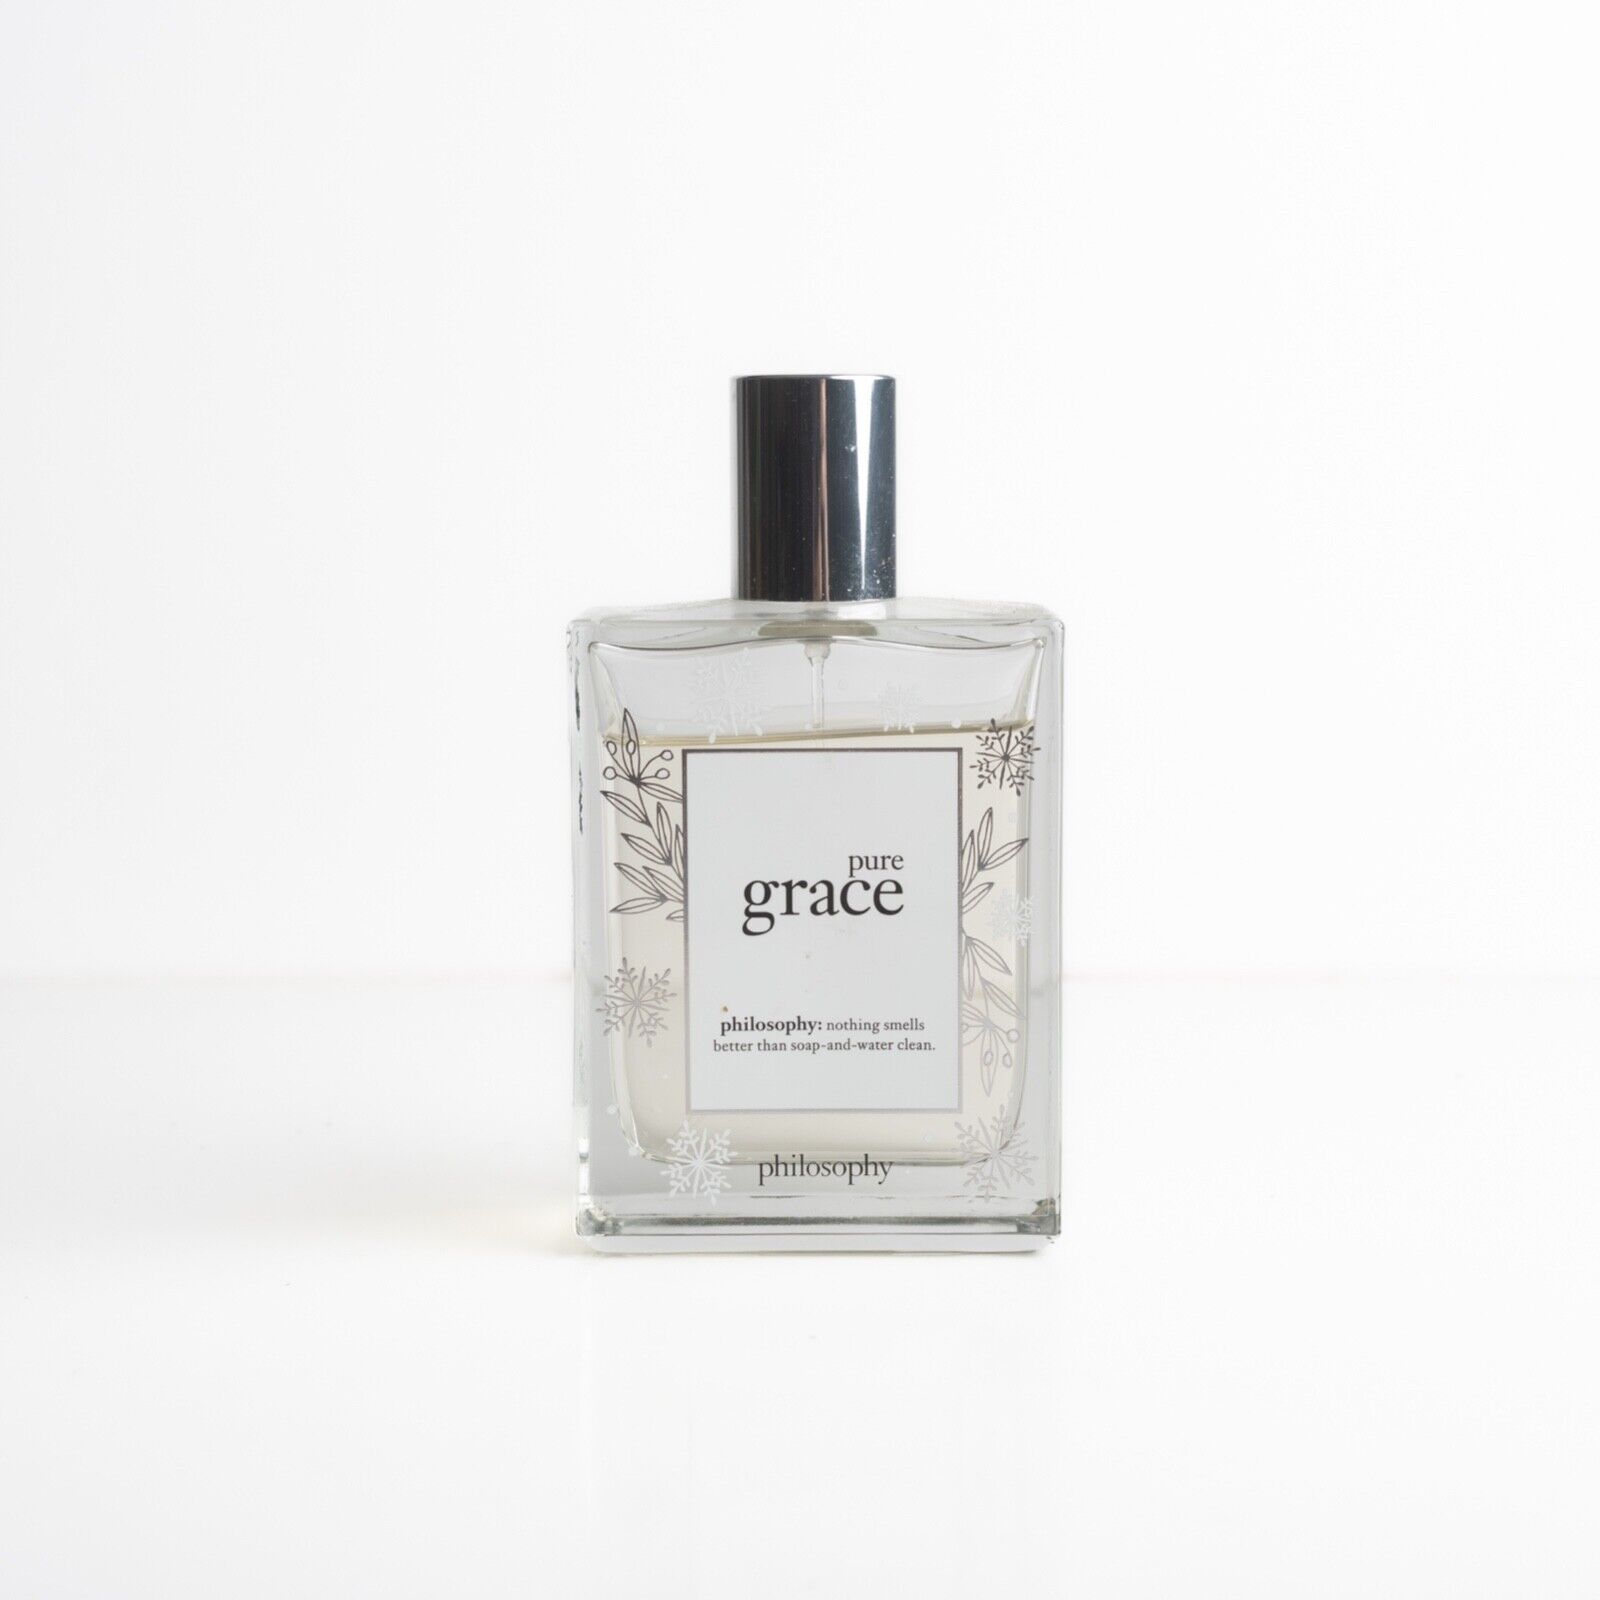 Philosophy Pure Grace Eau de Parfum Perfume Spray 4 fl oz Fragrance Jumbo